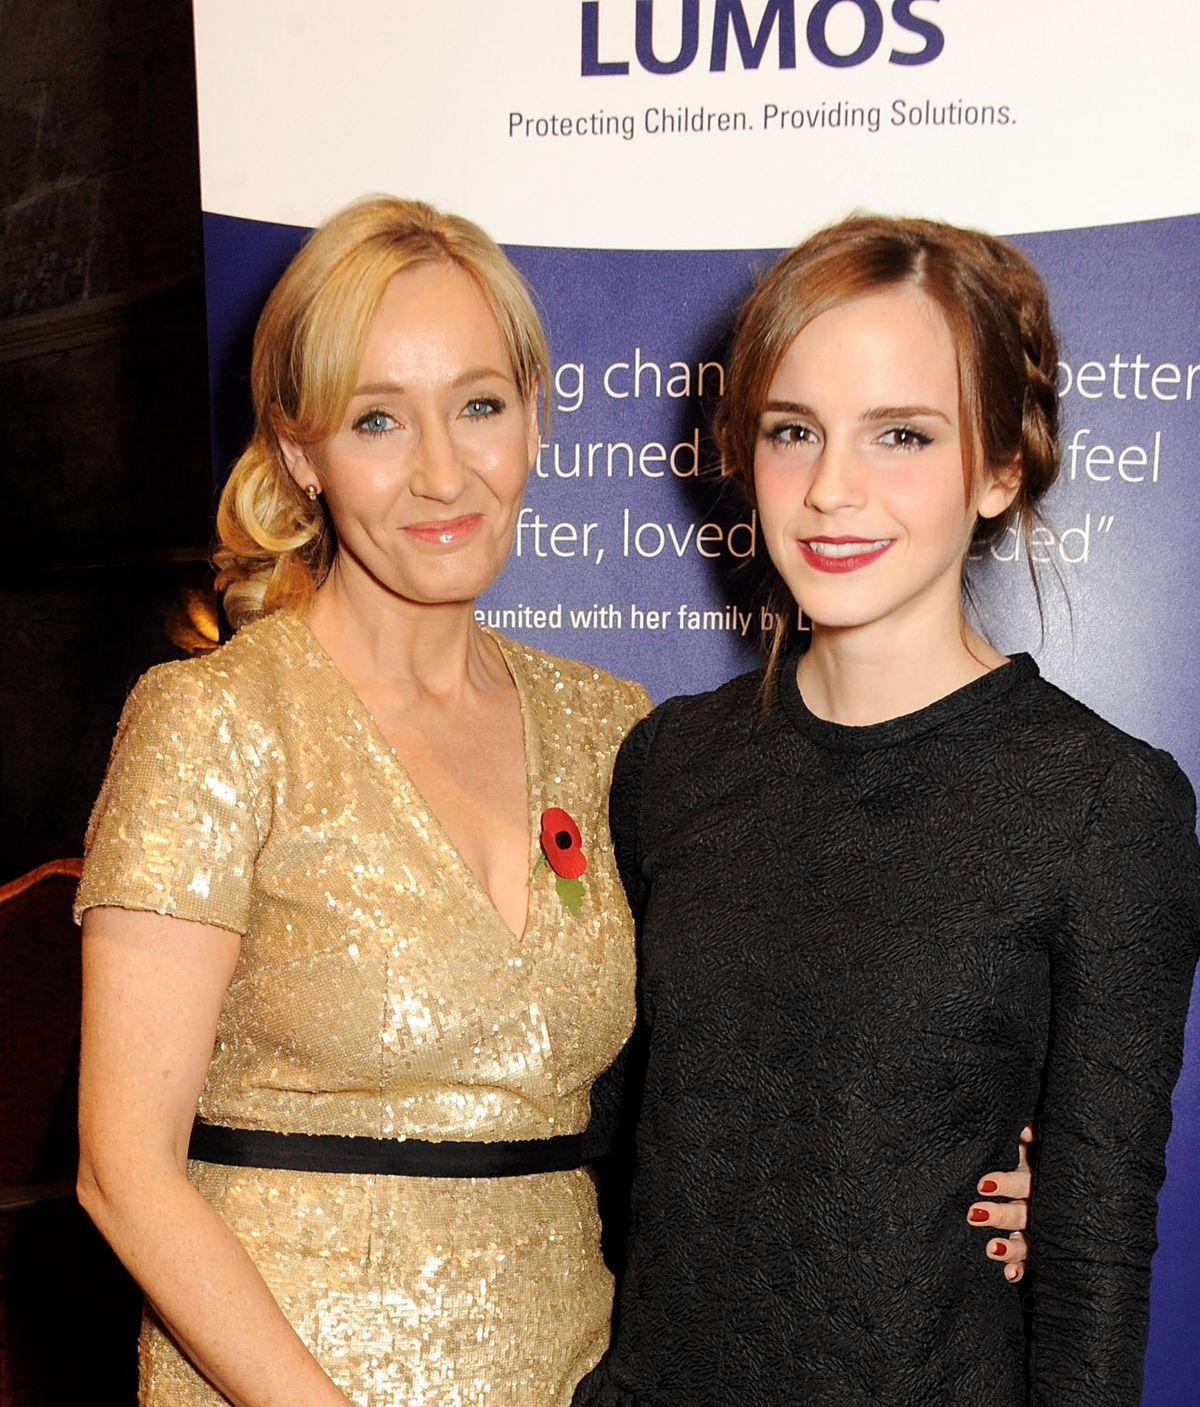 Emma Watson Speaks Out Against J.K. Rowling's Anti-Trans Remarks